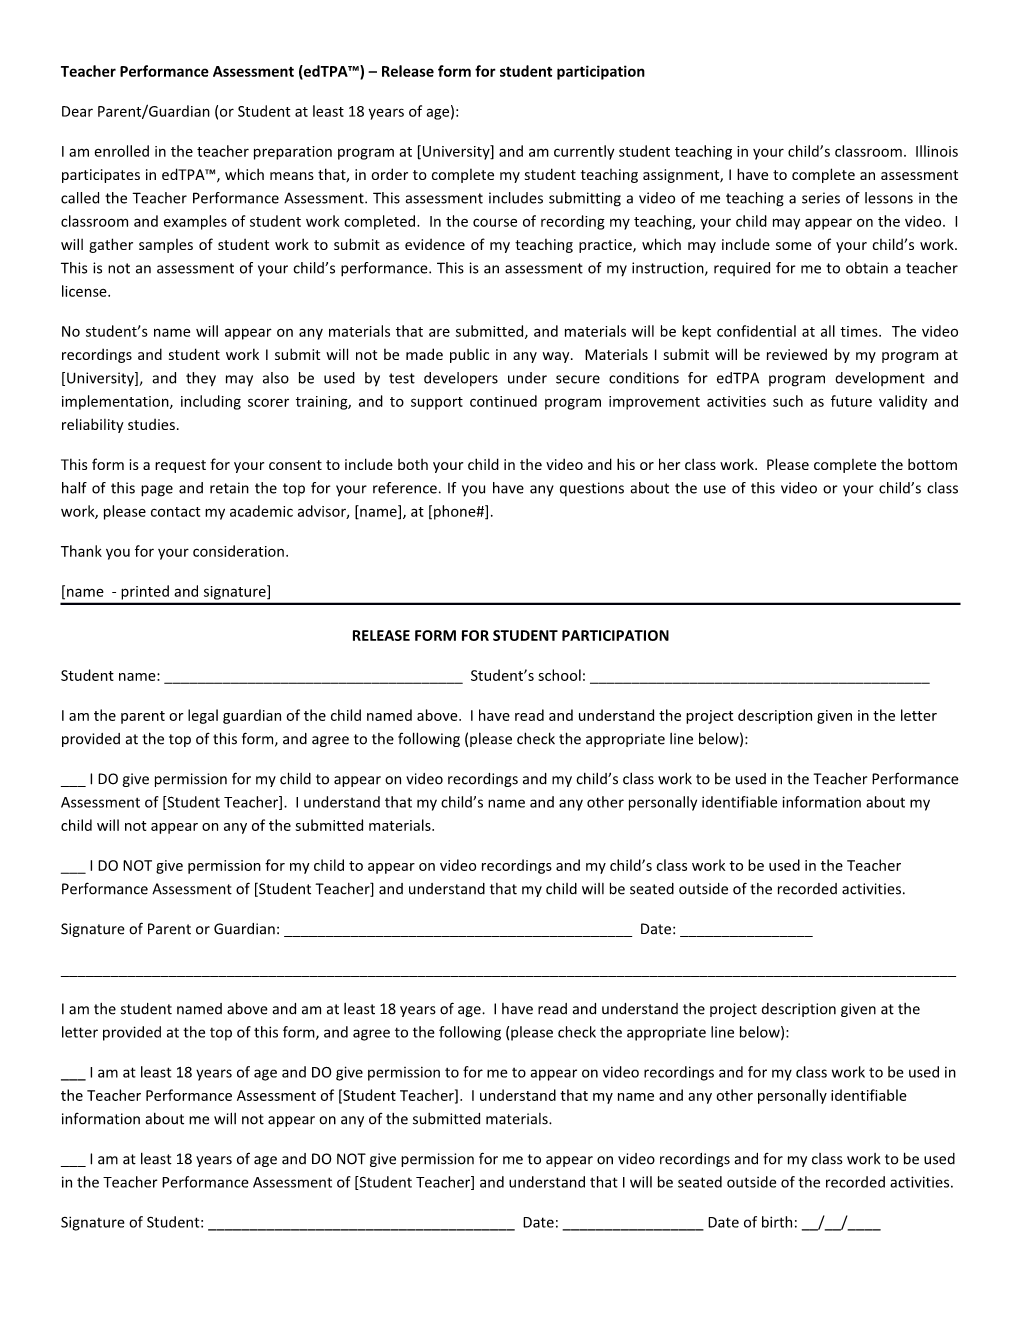 Teacher Performance Assessment (Edtpa ) Release Form for Student Participation